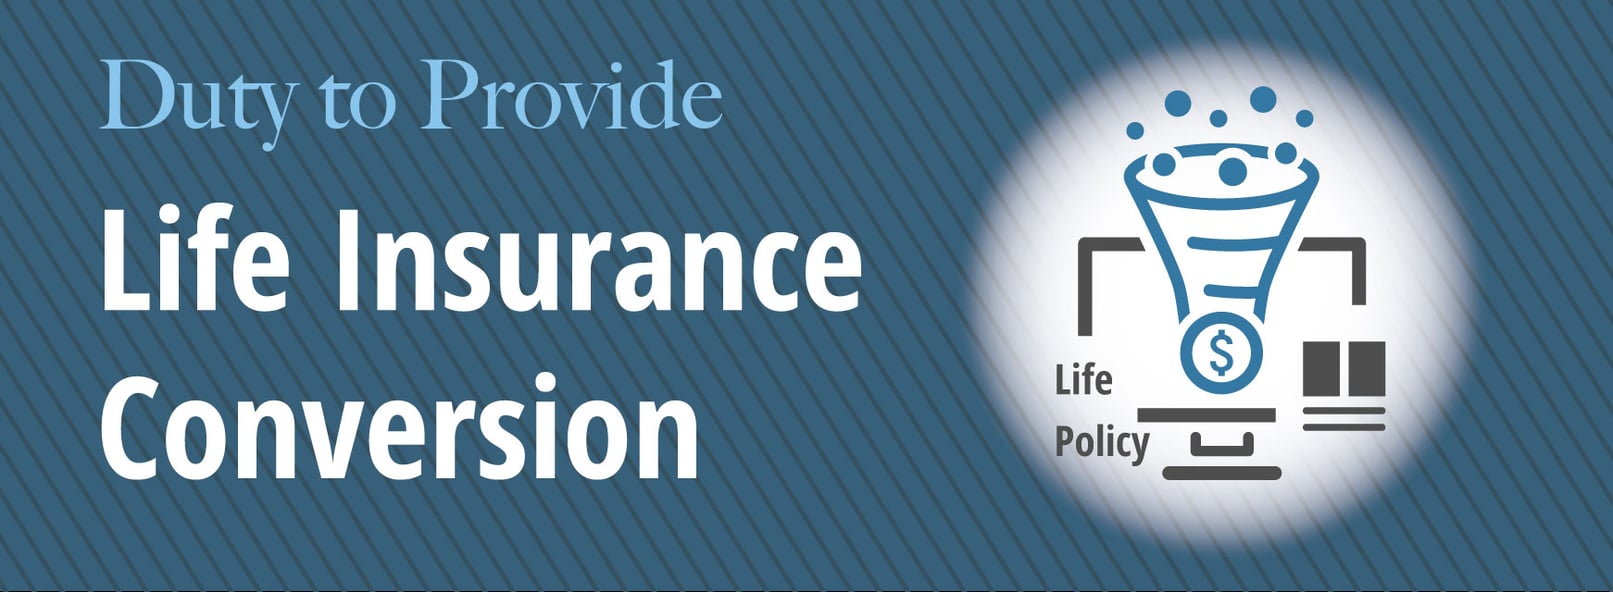 life-insurance-conversion.jpg